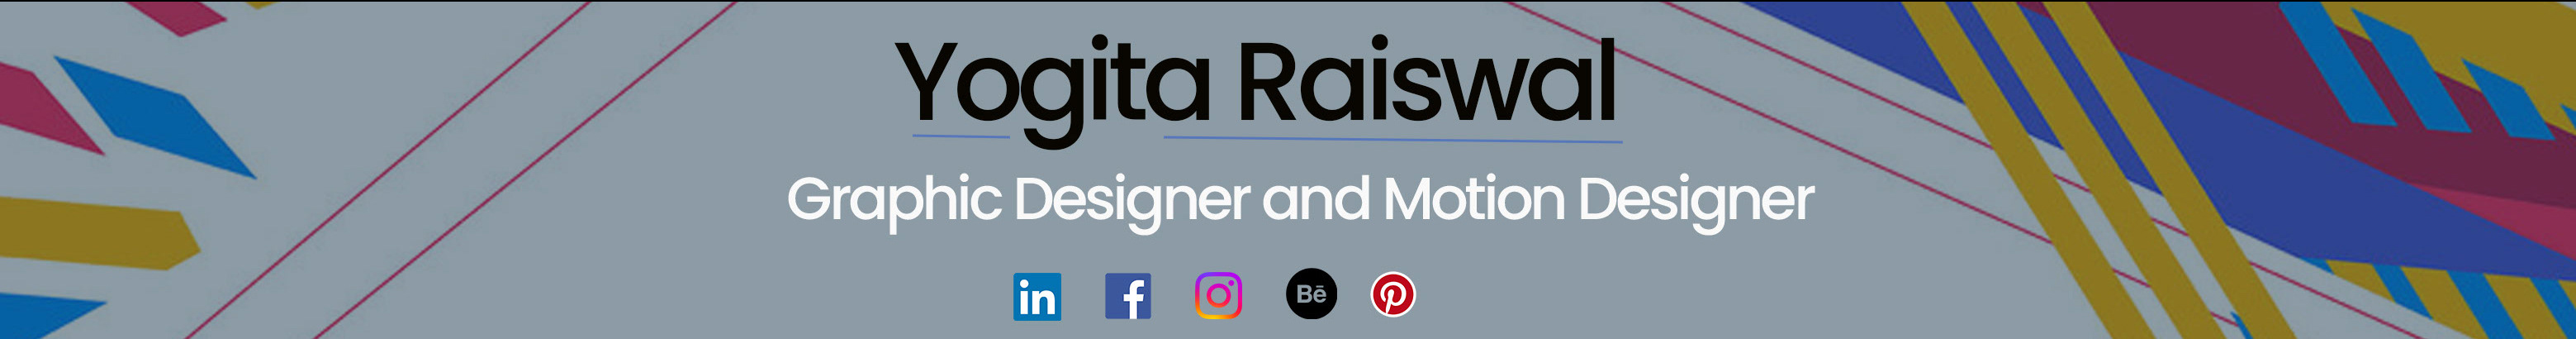 Yogita Raiswal's profile banner